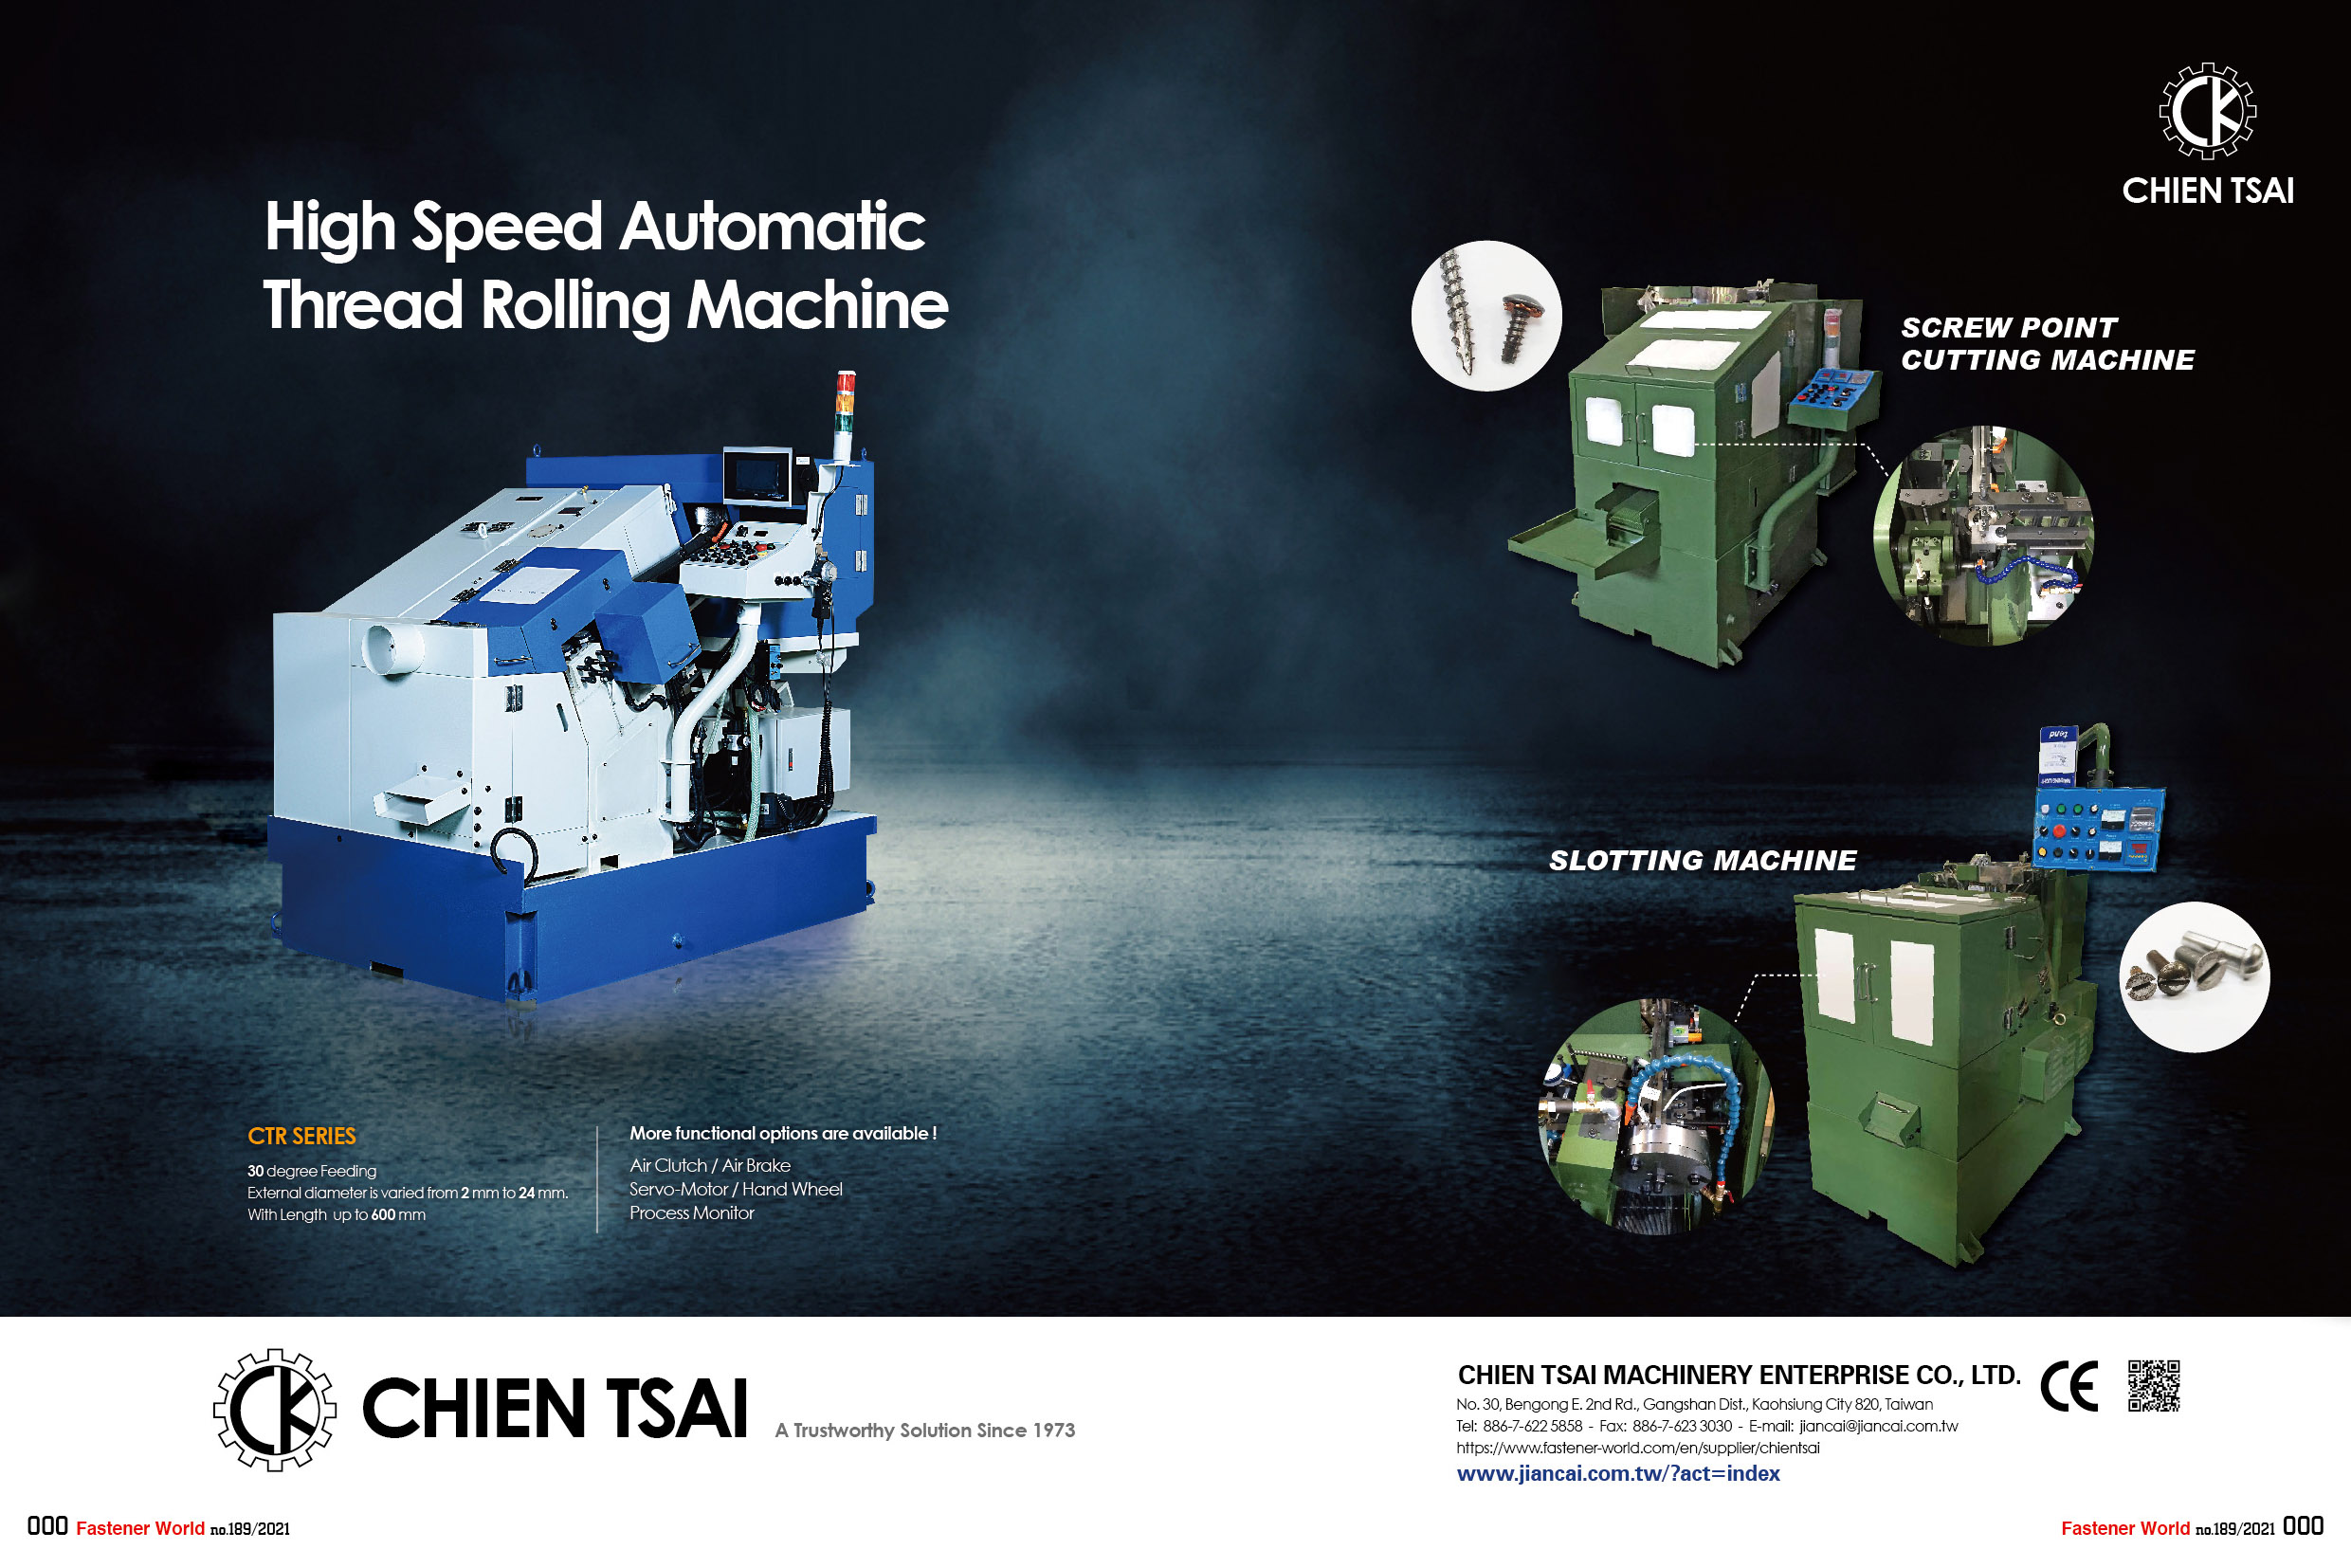 CHIEN TSAI MACHINERY ENTERPRISE CO., LTD. , High Speed Automatic Thread Rolling Machine, Screw Point Cutting Machine, Slotting Machine , Thread Rolling Machine